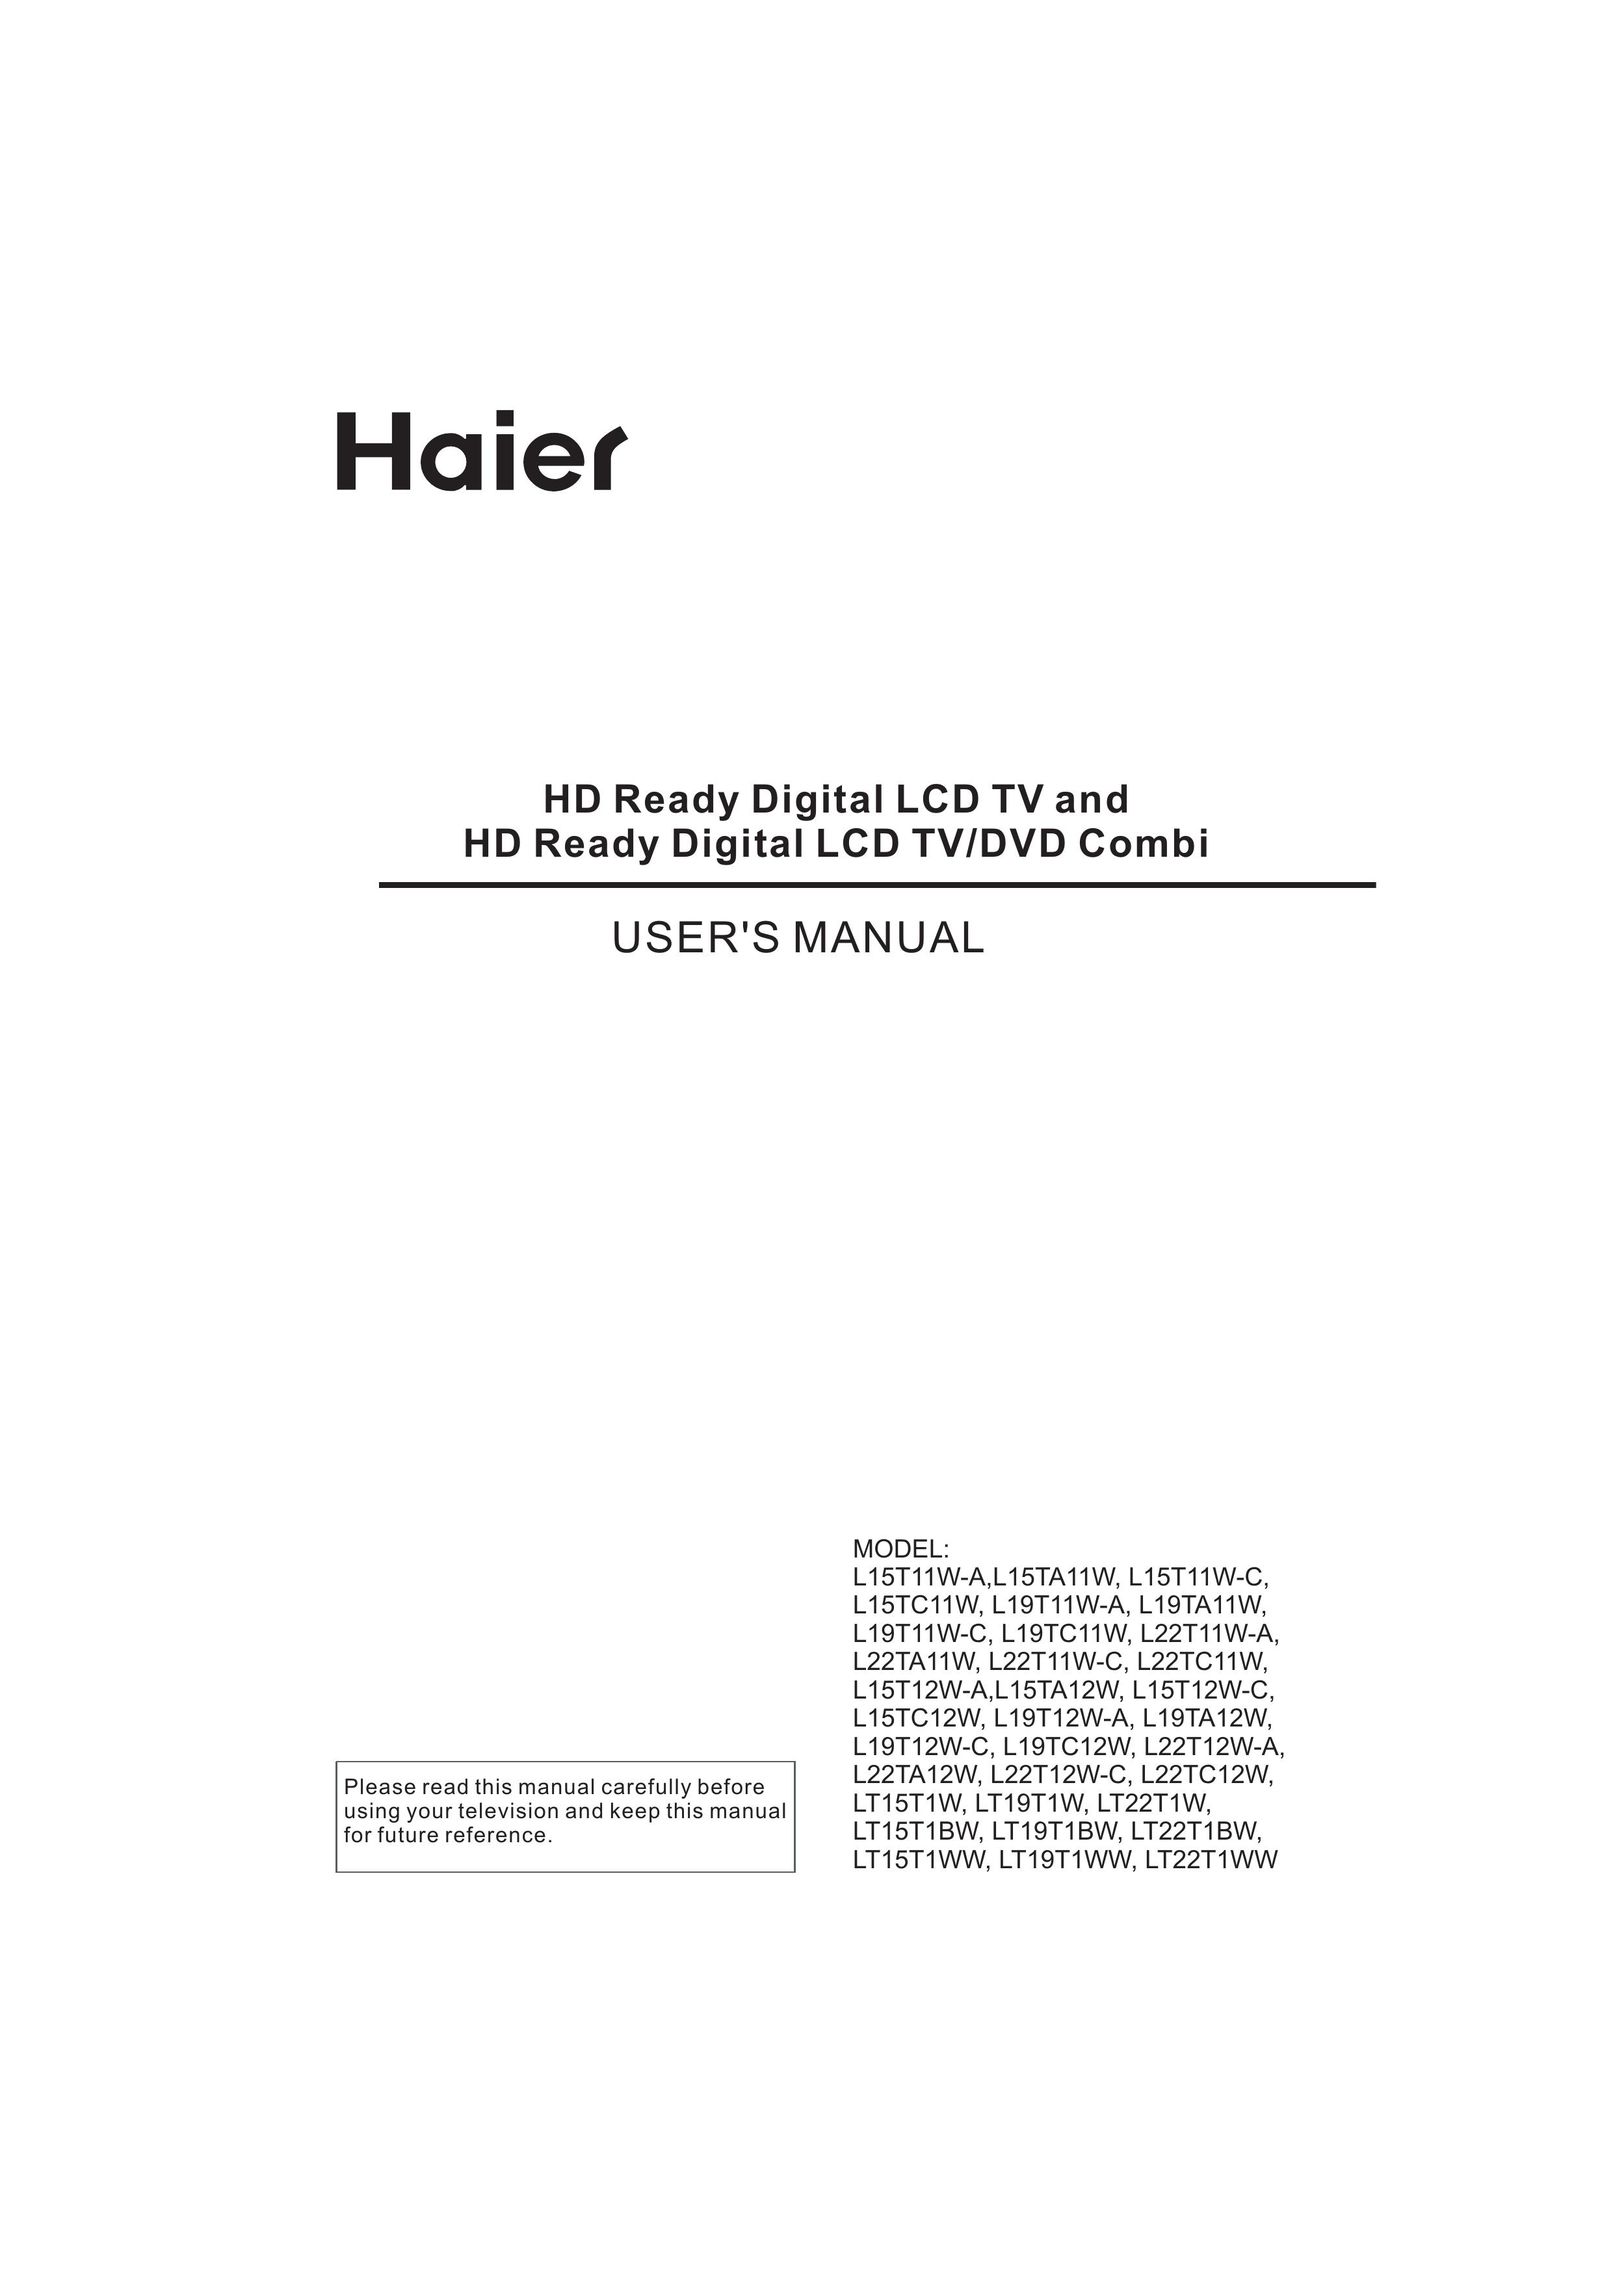 Haier L19T12W-C TV DVD Combo User Manual